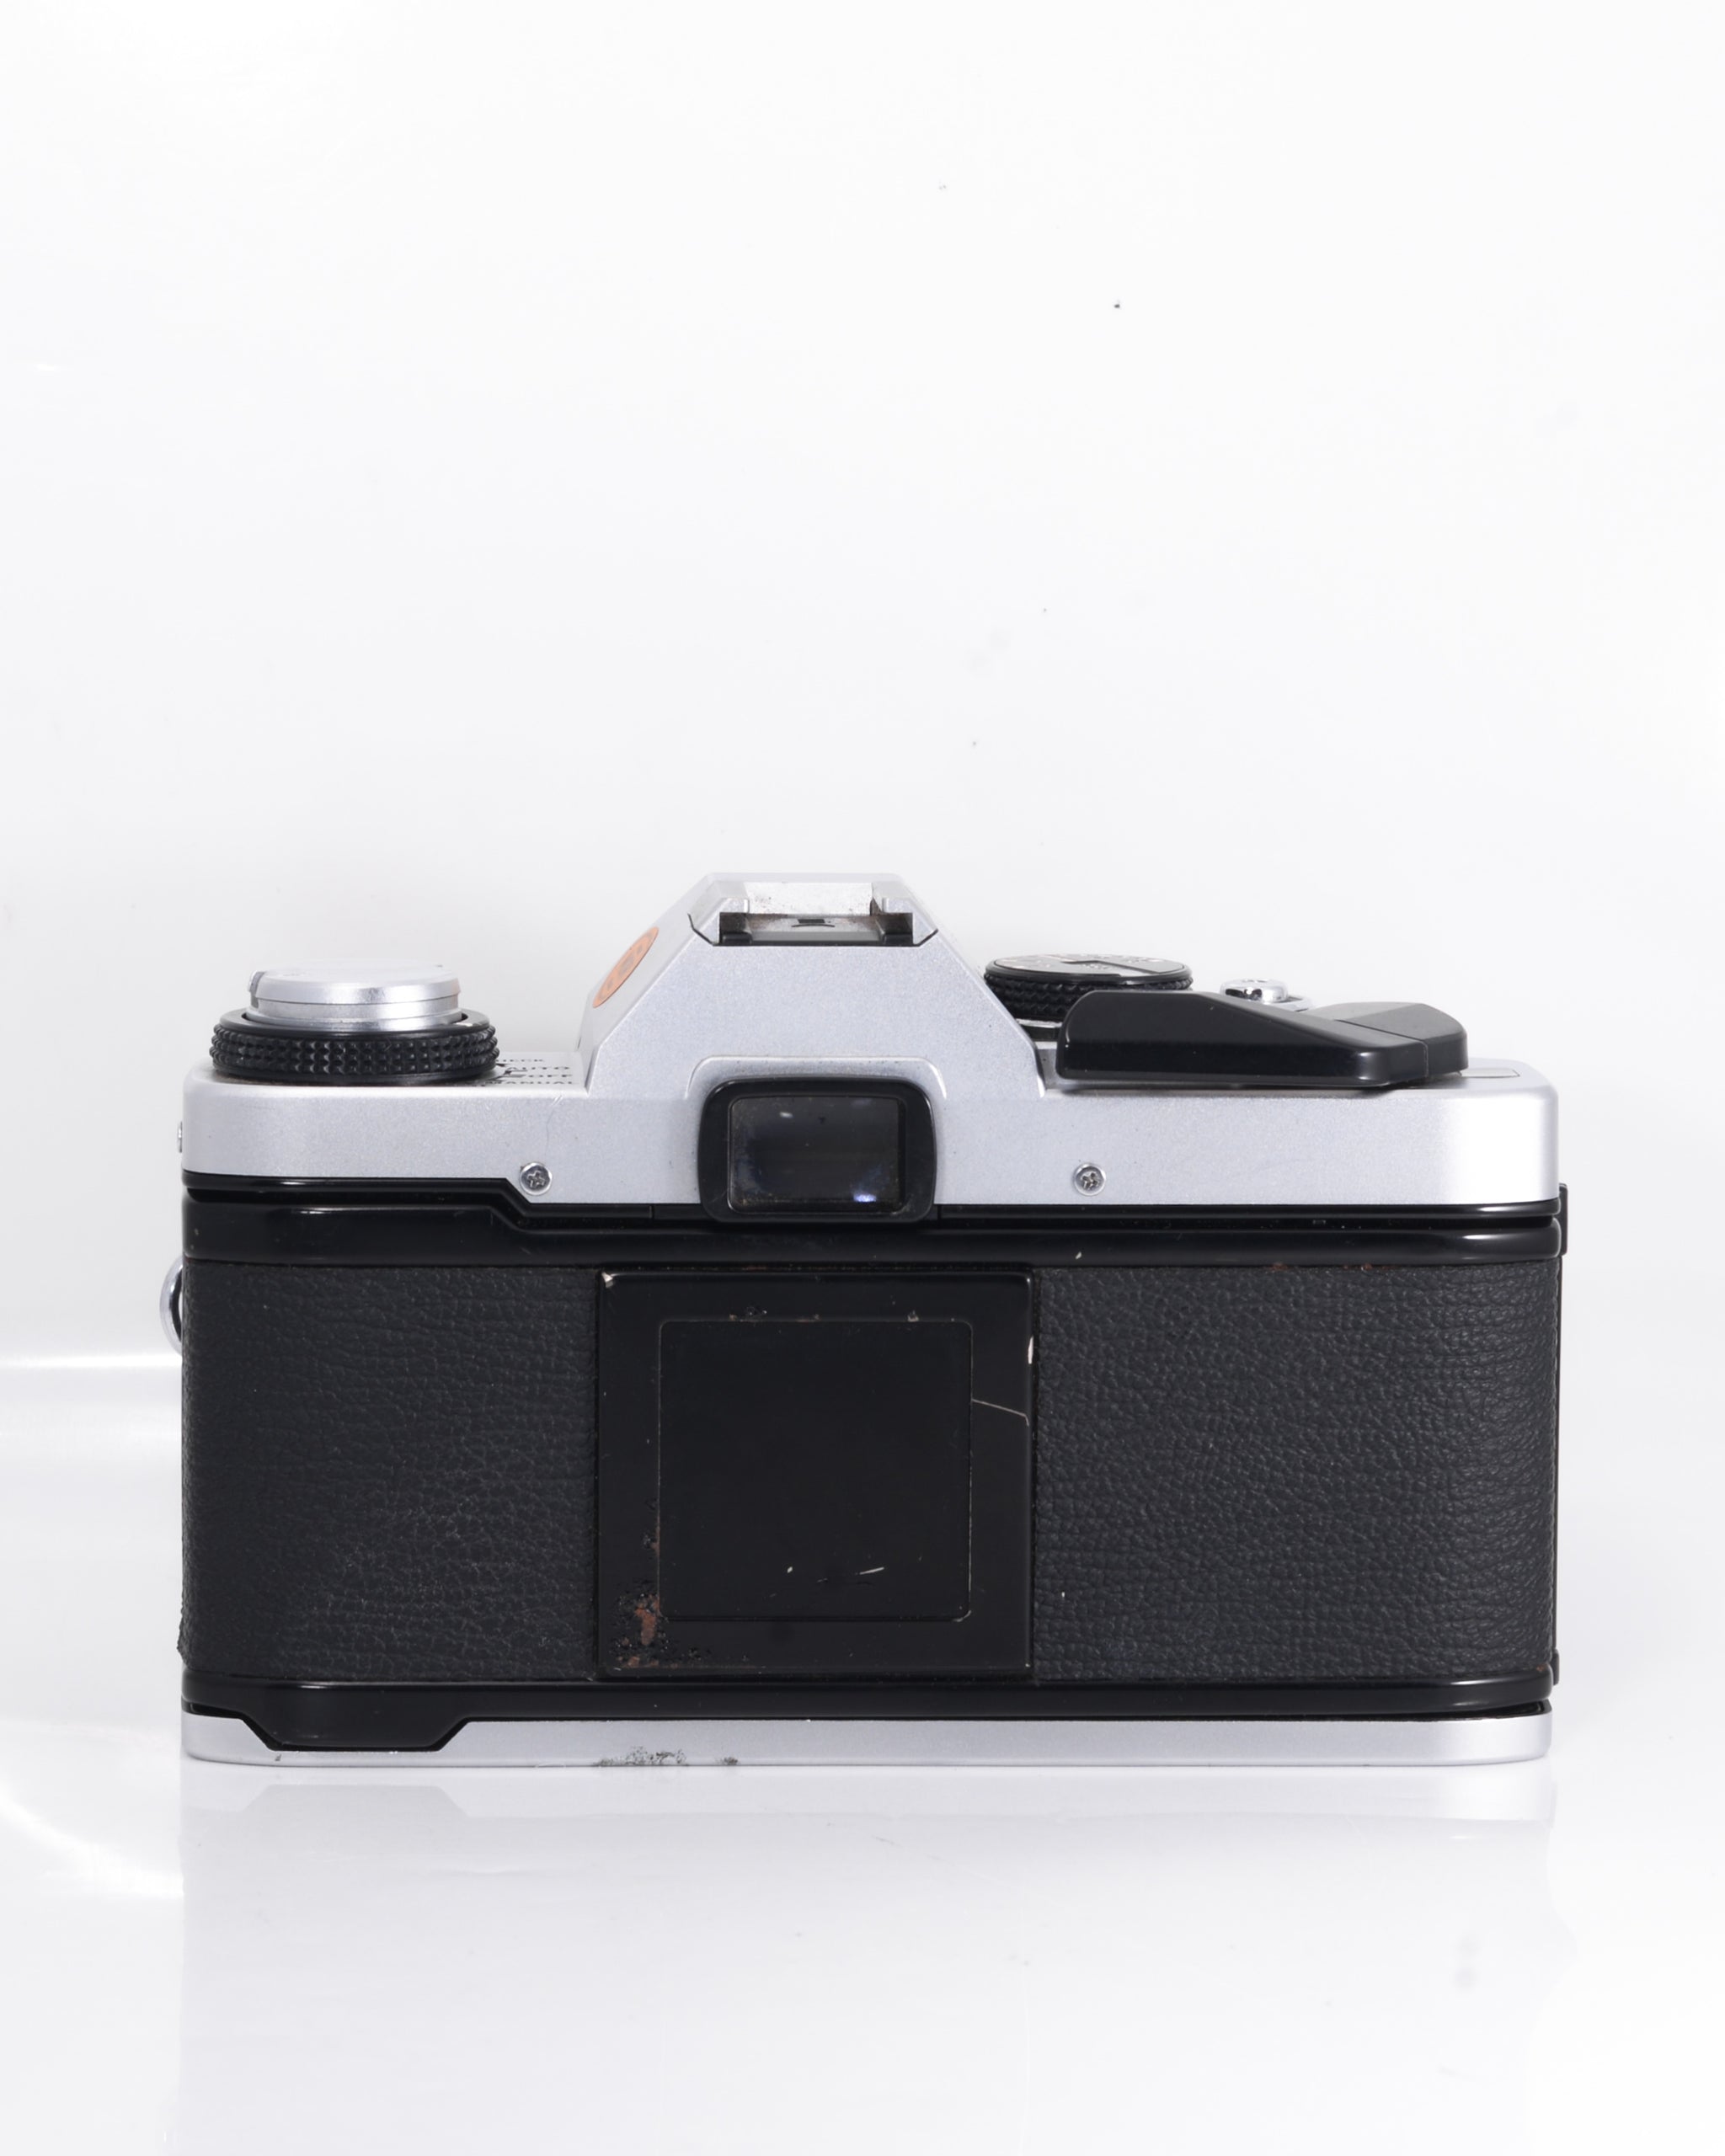 Olympus OM-20 35mm SLR Film Camera with 28mm f3.5 Lens - Mori Film Lab